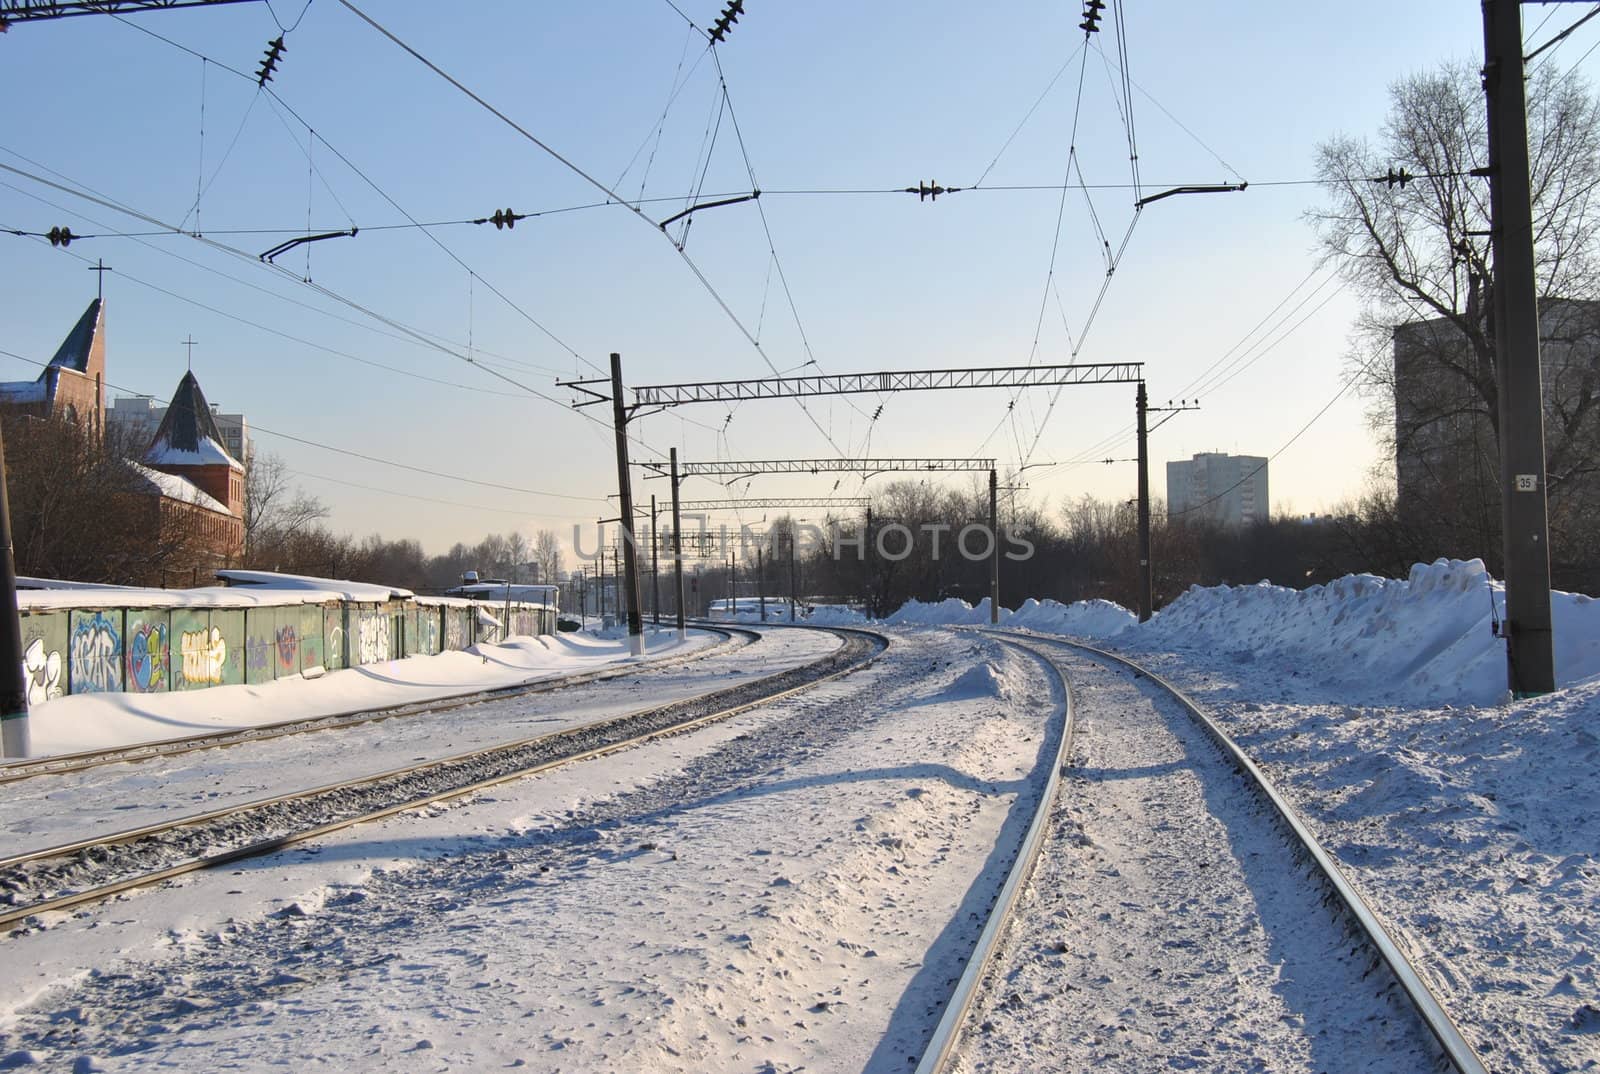 Winter Railway by rogkoff